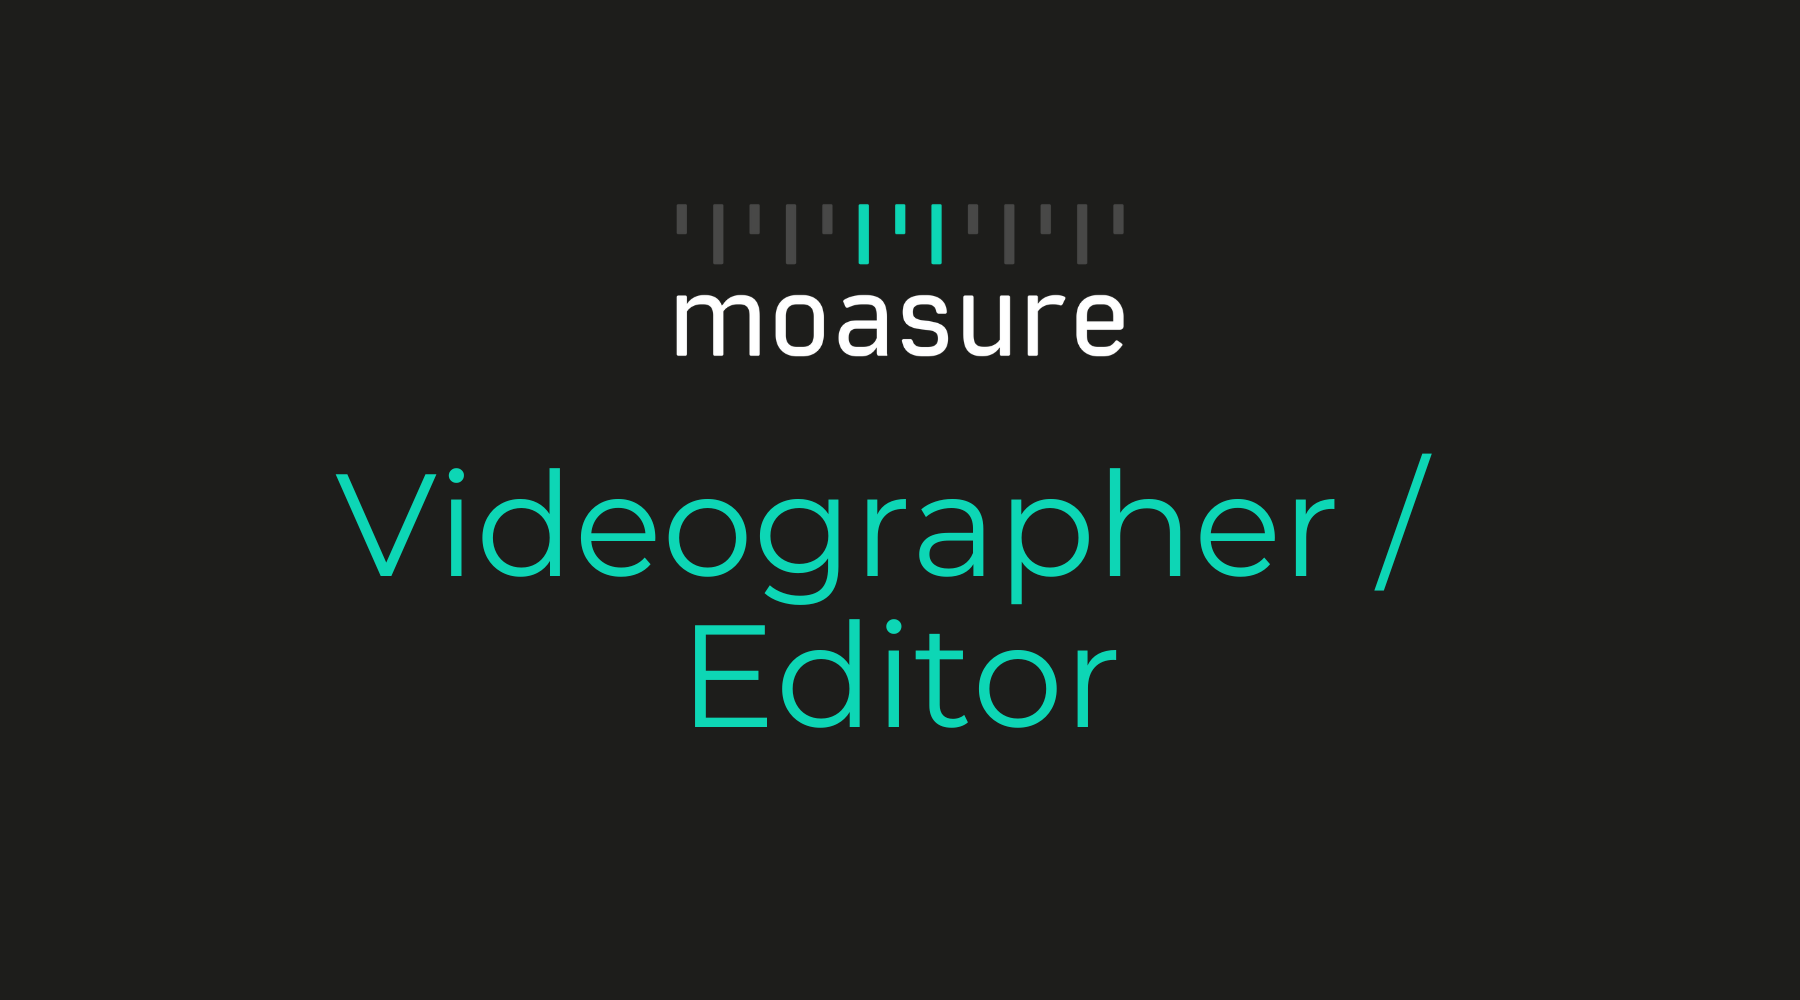 Videographer / Editor